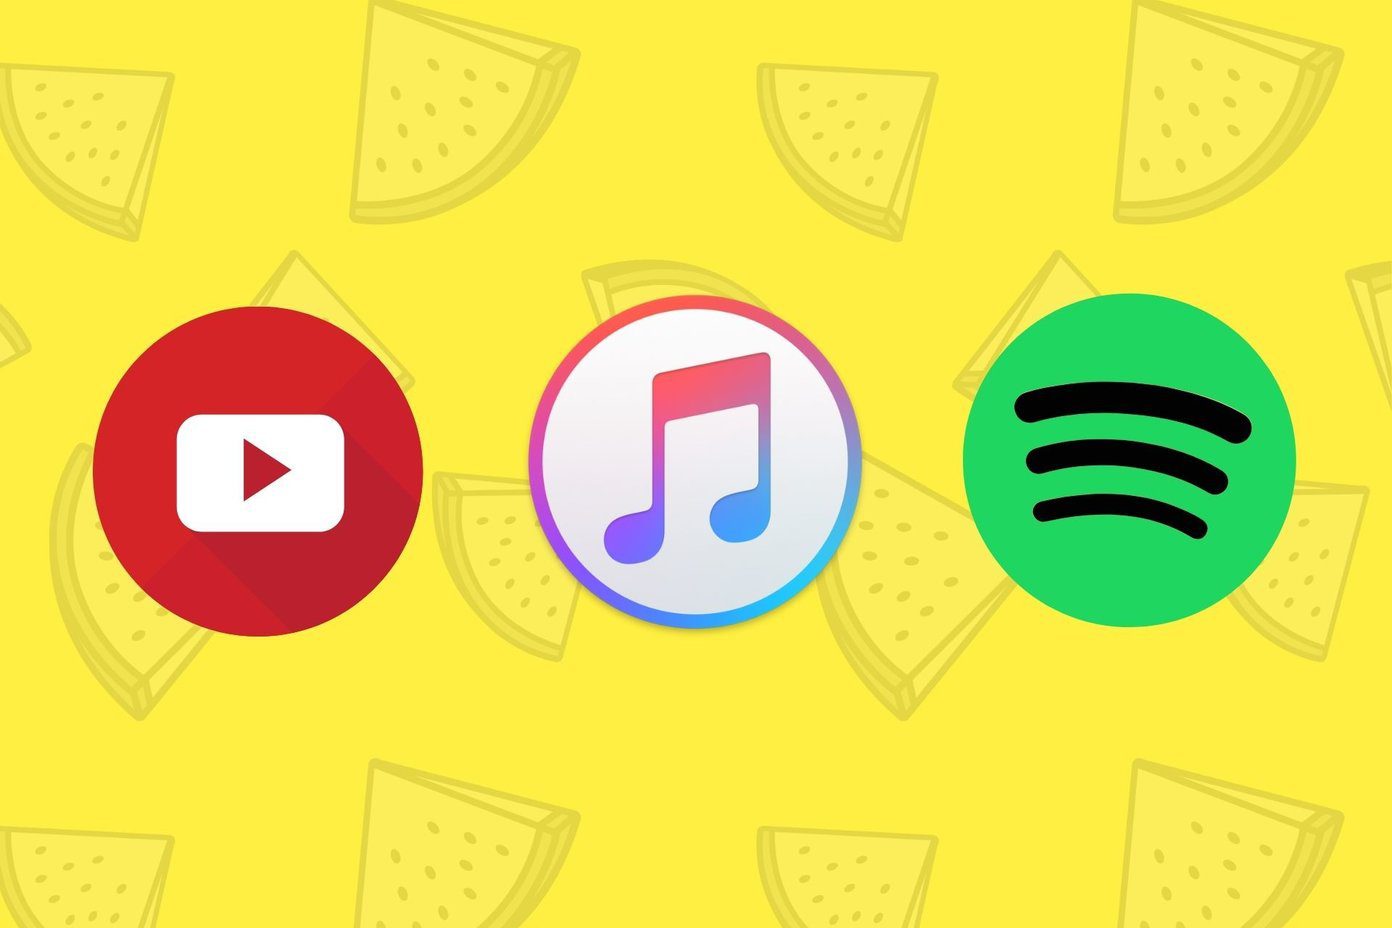 You Tube Music vs Apple Music vs Spotify comparison